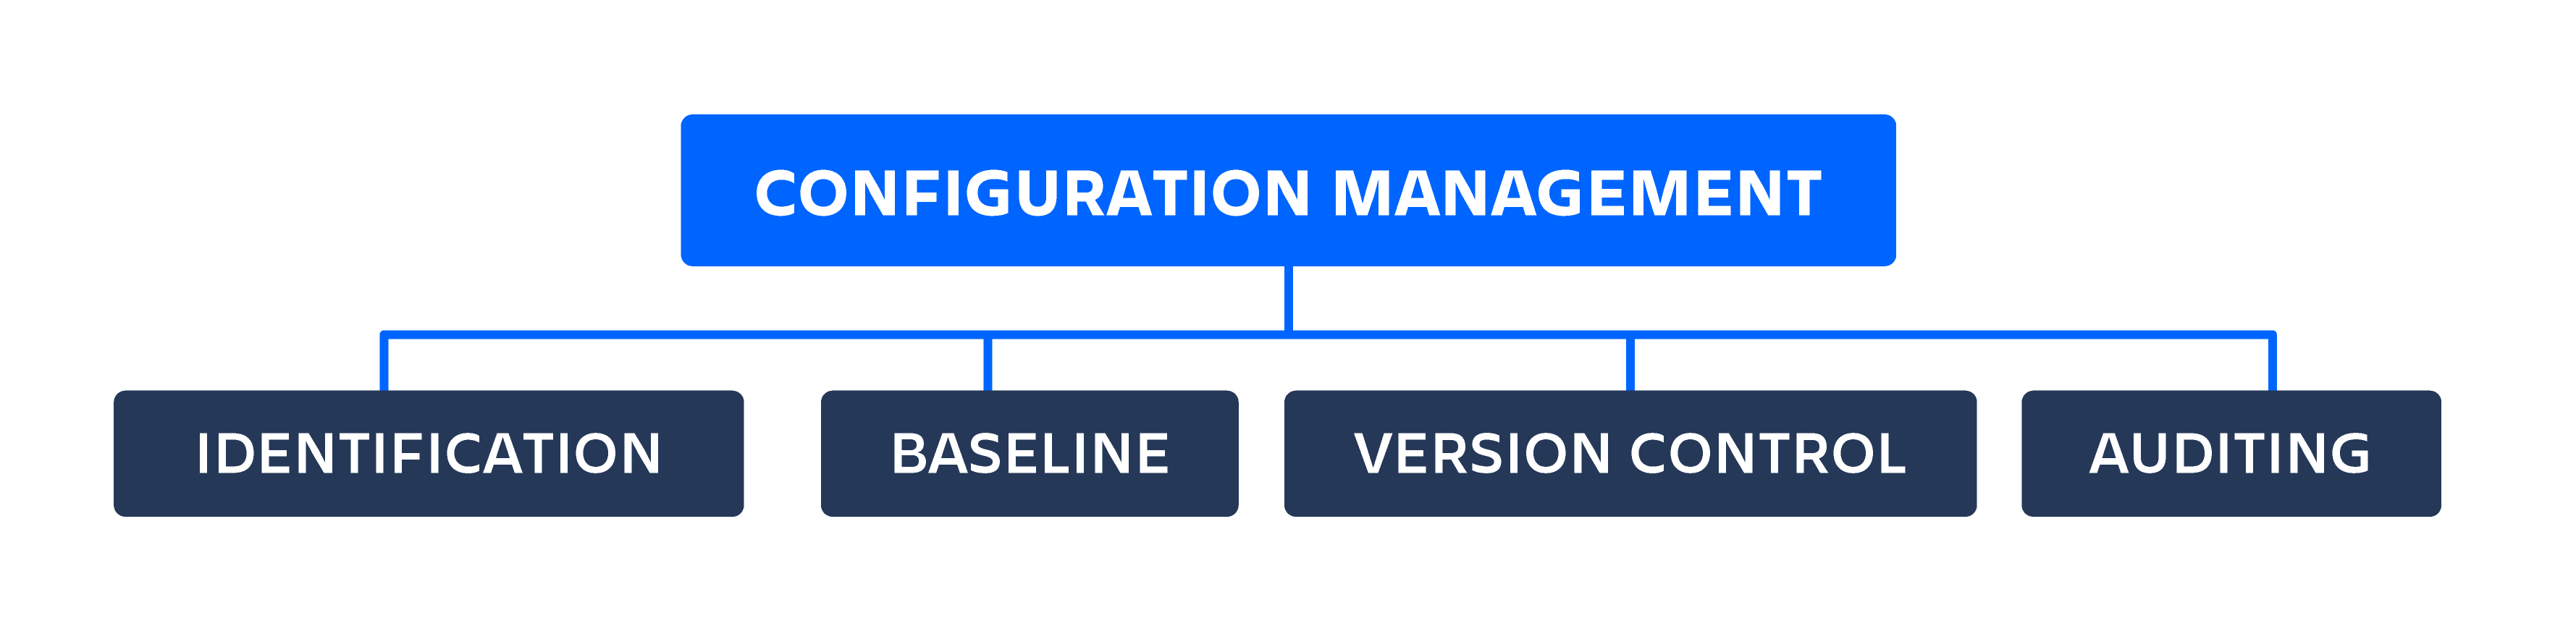 Configuration Management Definition And Benefits